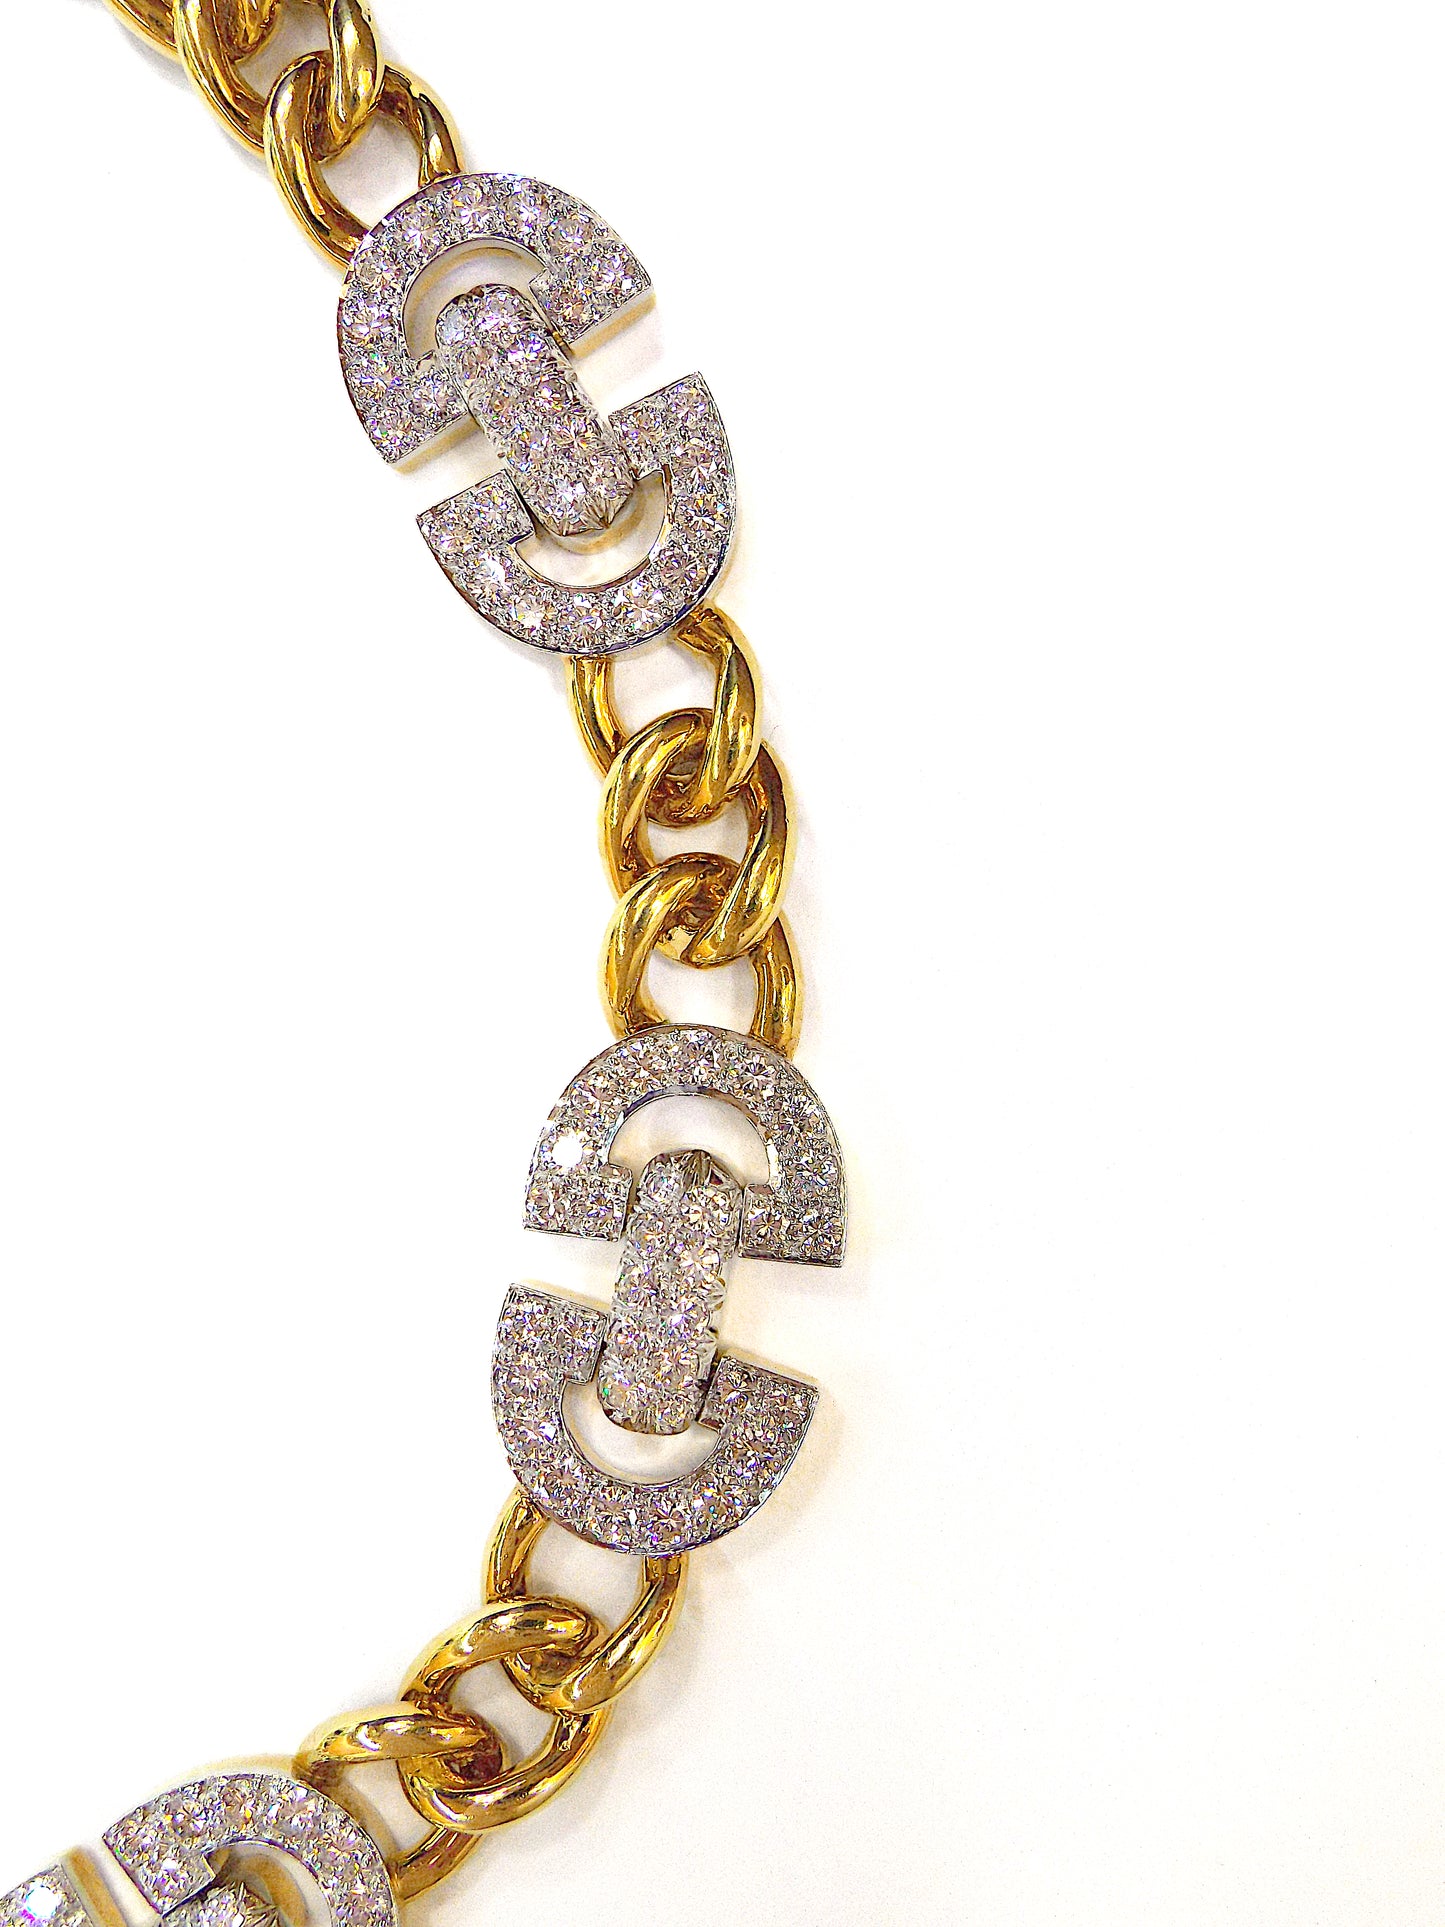 David Webb Gold and Diamond Necklace